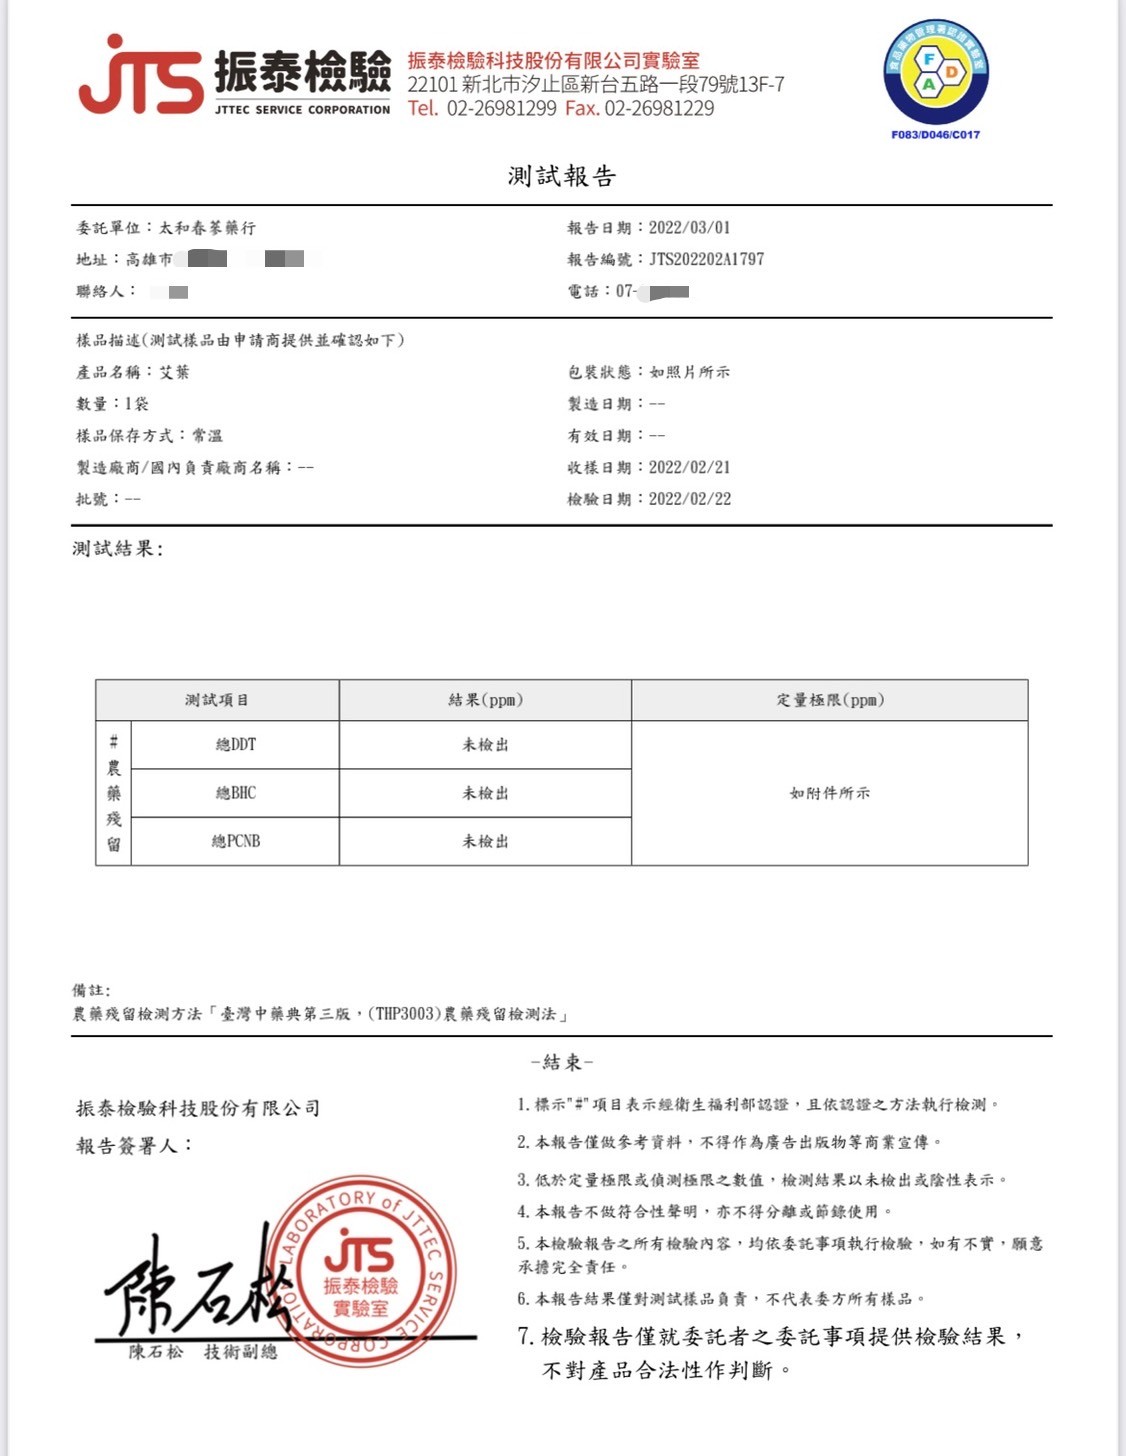 LINE ALBUM 艾草澡包素材文宣 221013 14